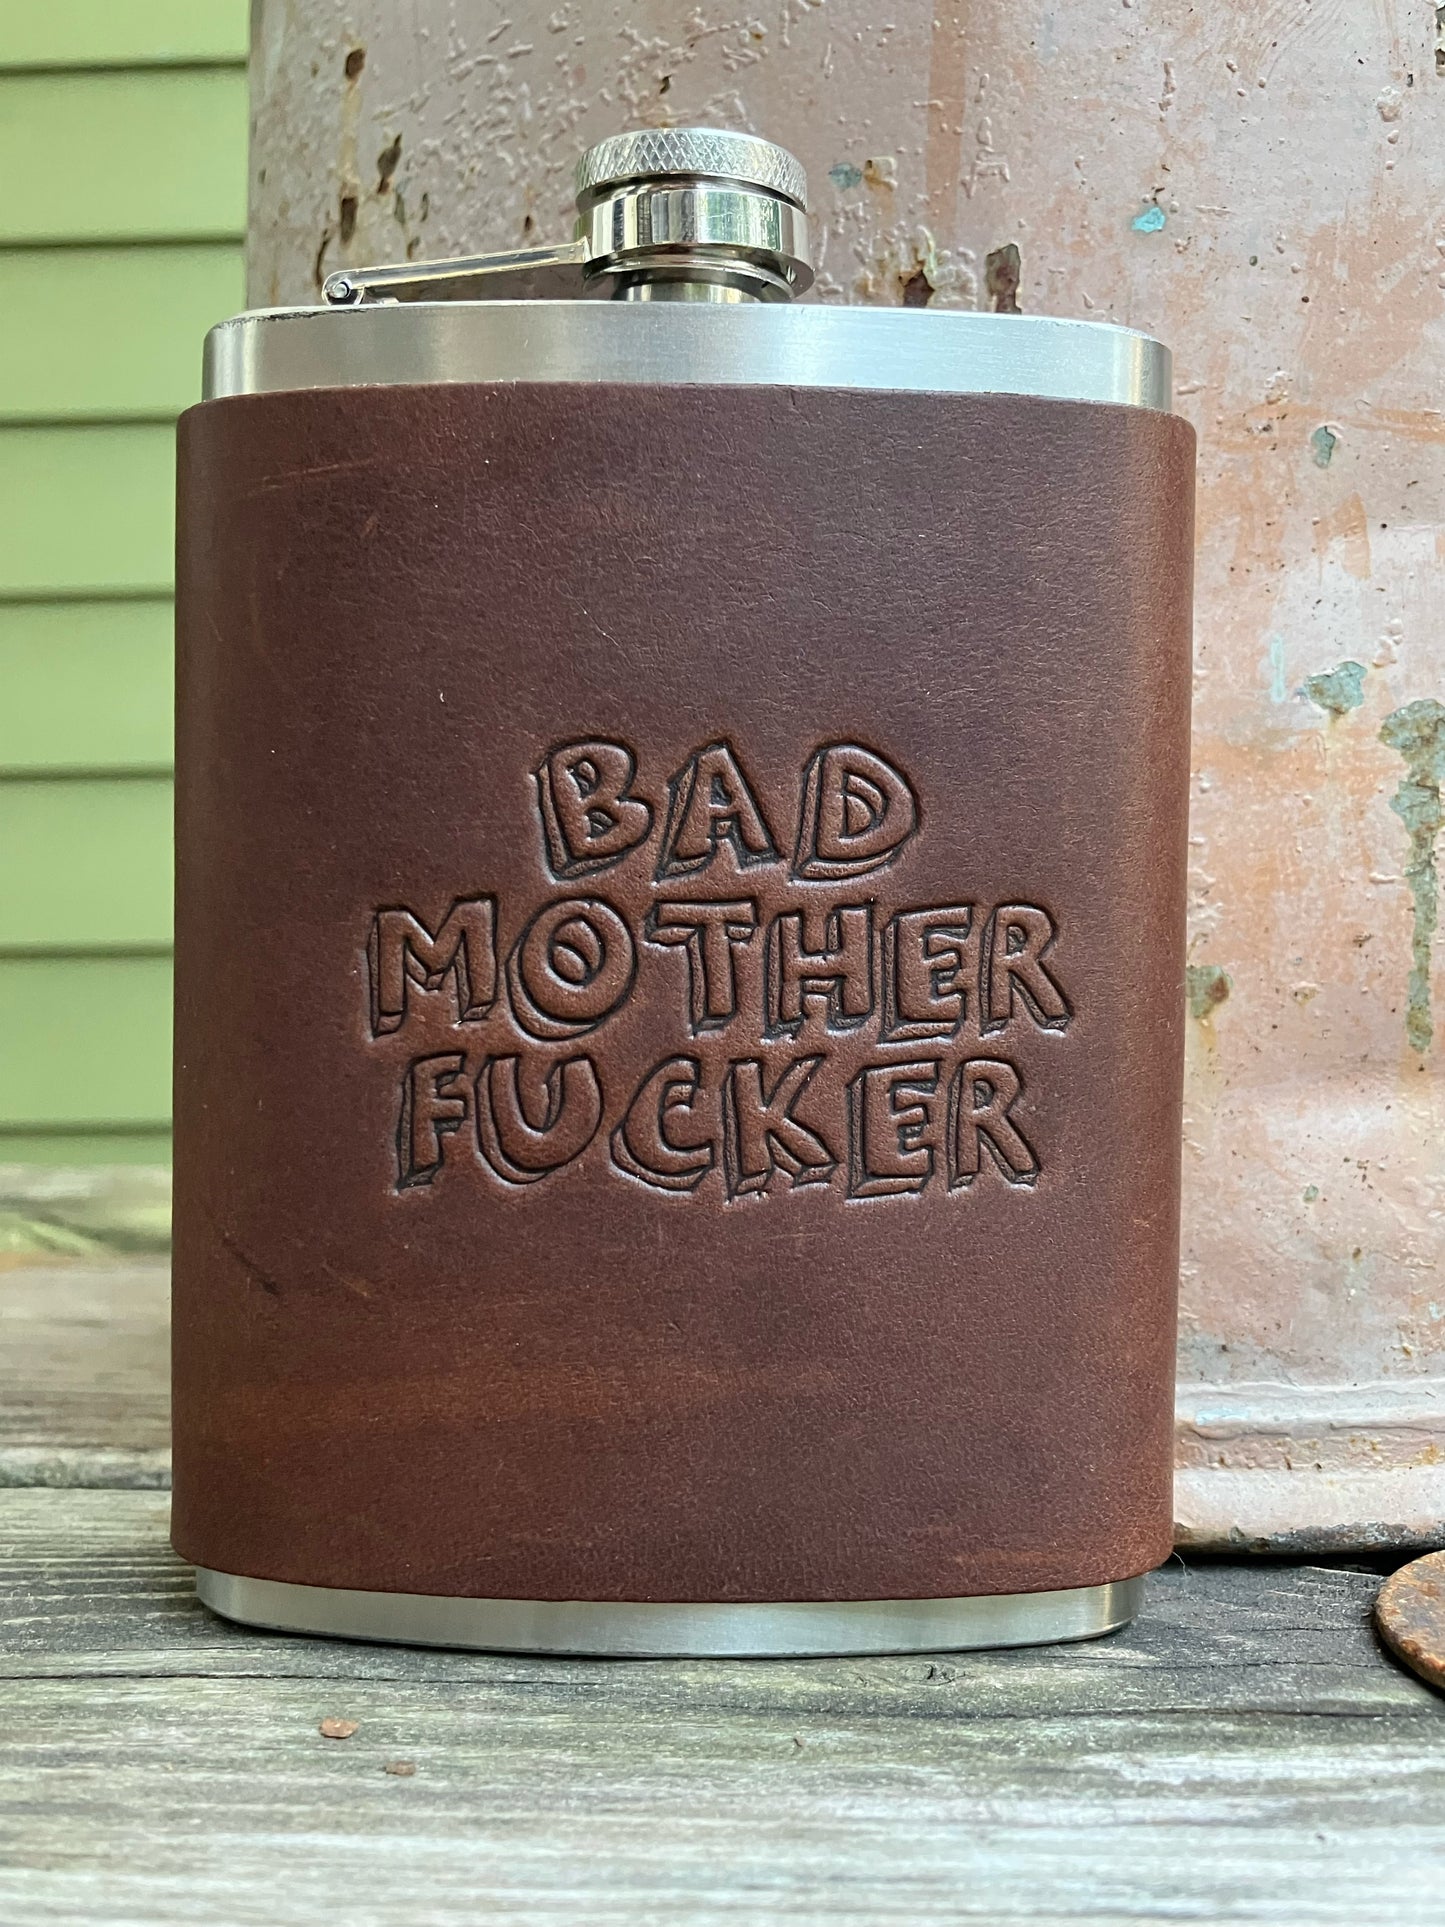 Leather Flask - Bad Mother Fucker